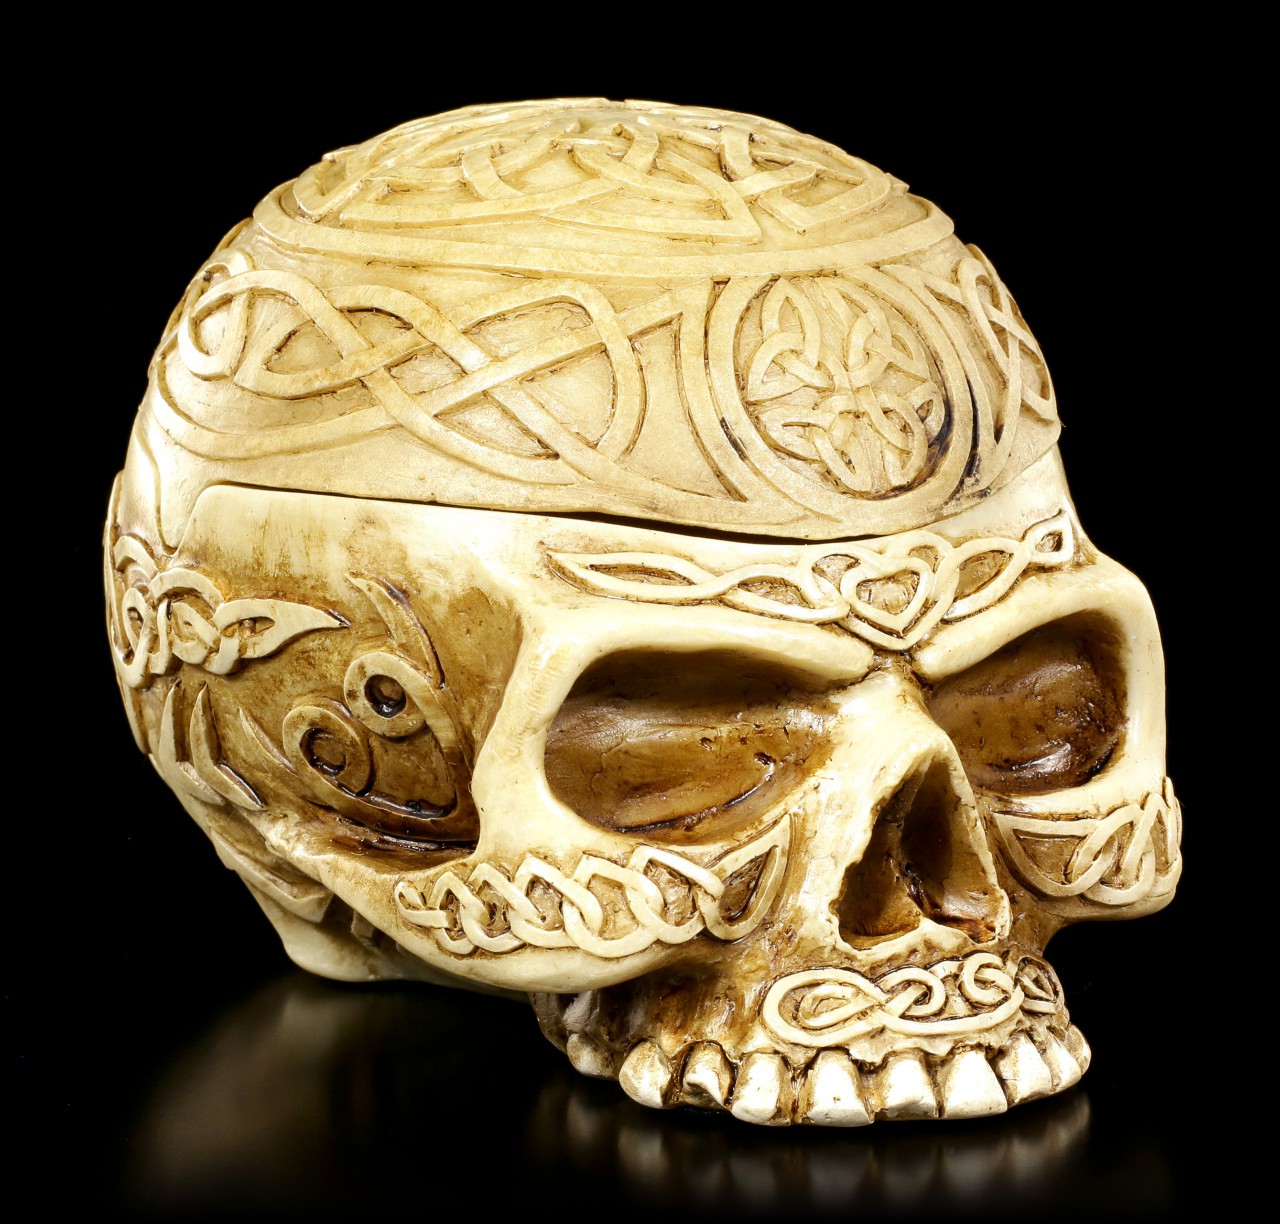 Skull Ashtray - Bone